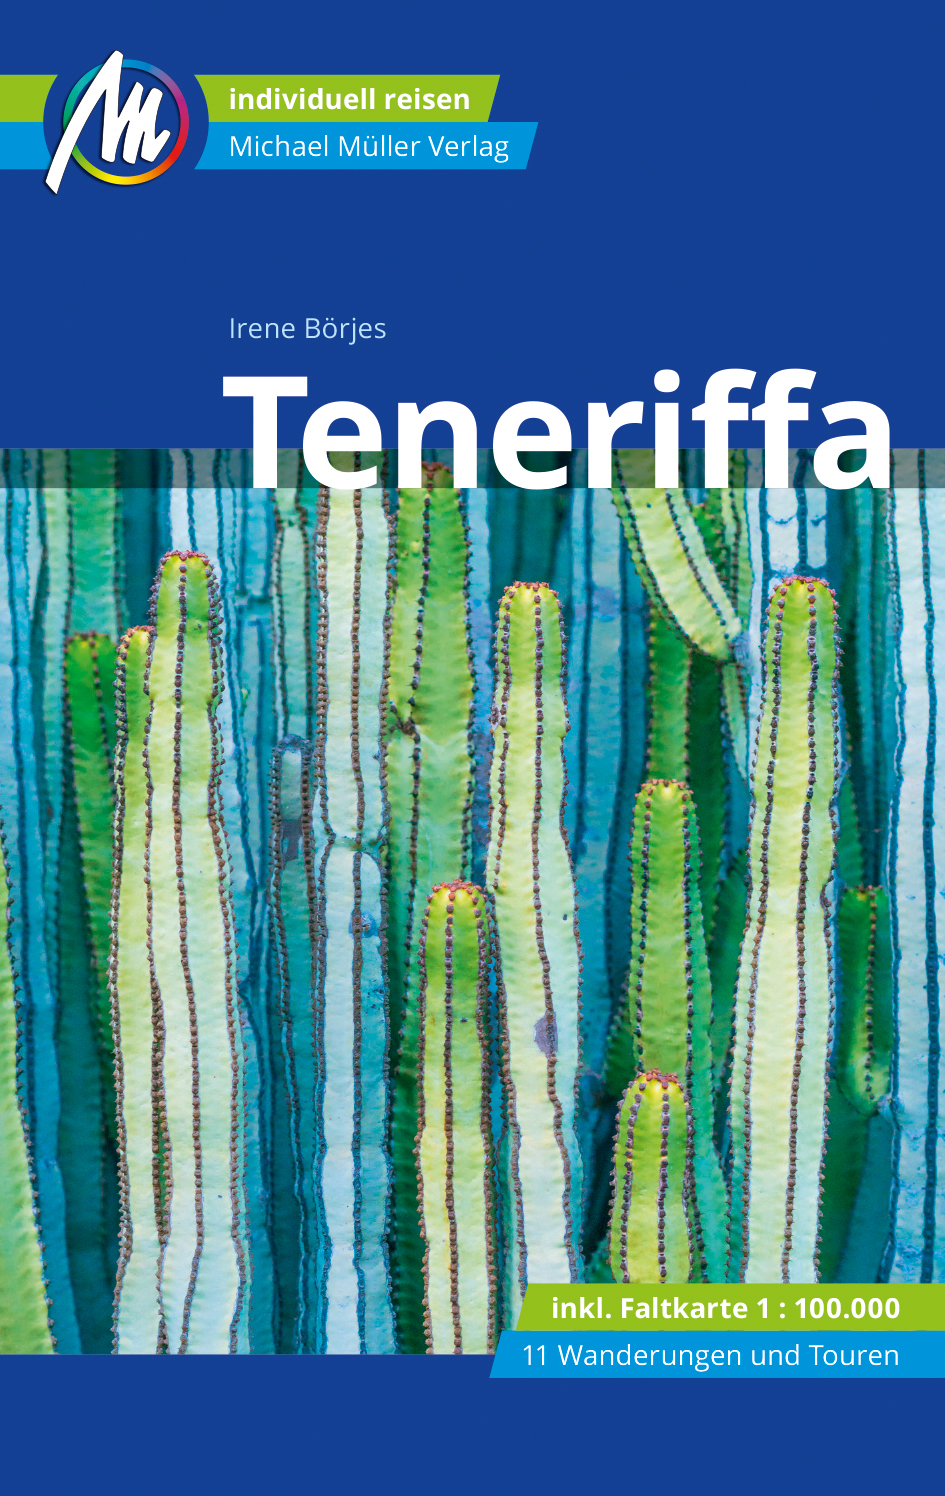 Online bestellen: Reisgids Teneriffa - Tenerife | Michael Müller Verlag